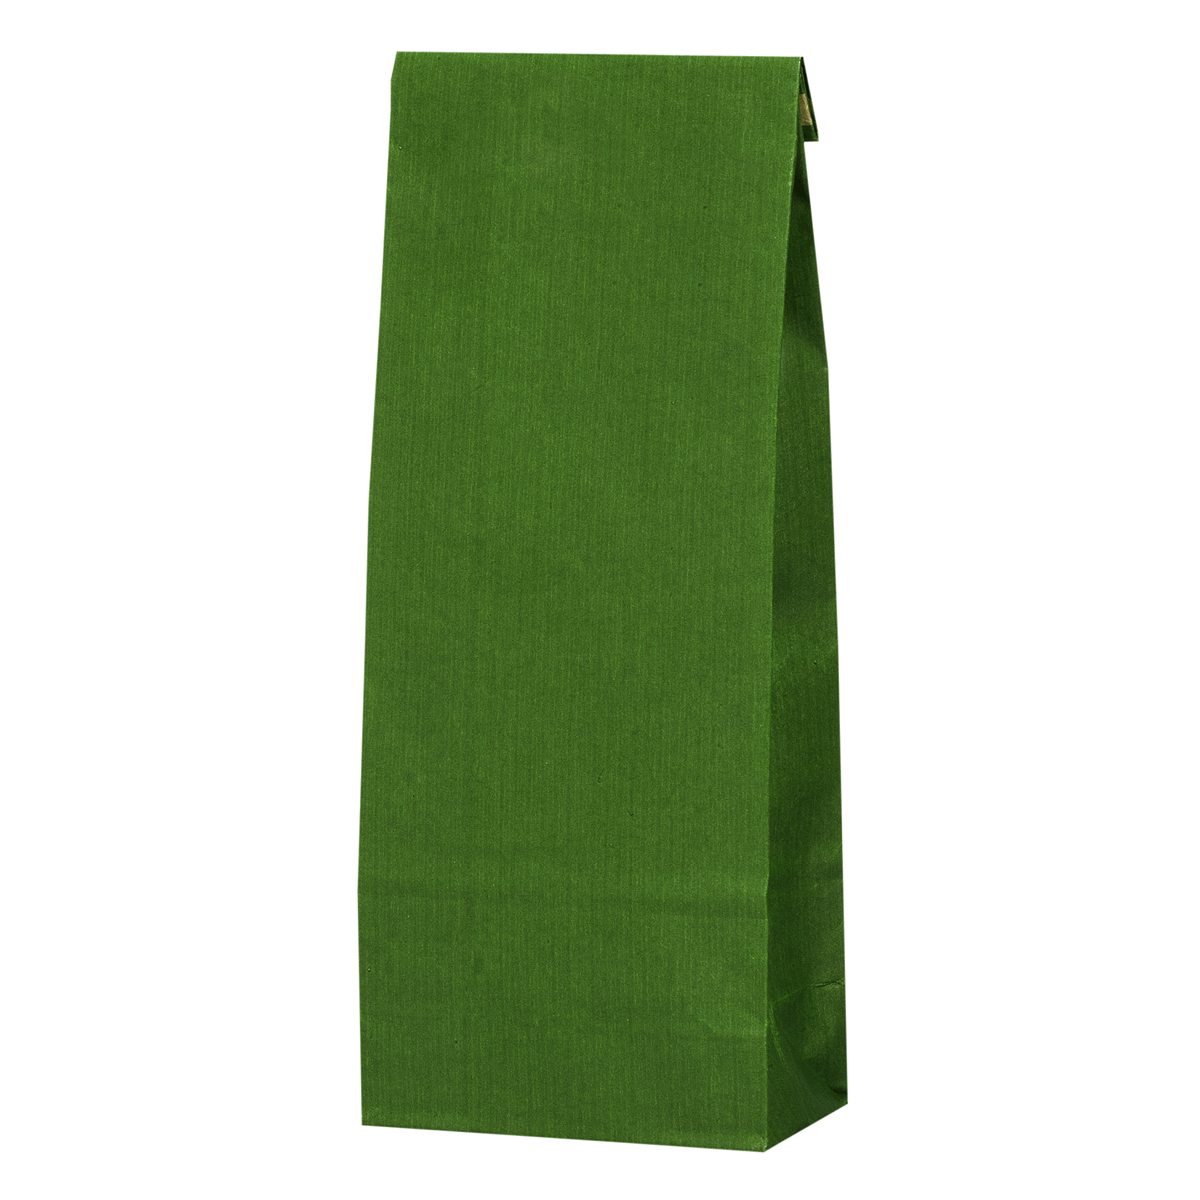 Natronpapierbeutel, 100g, grün